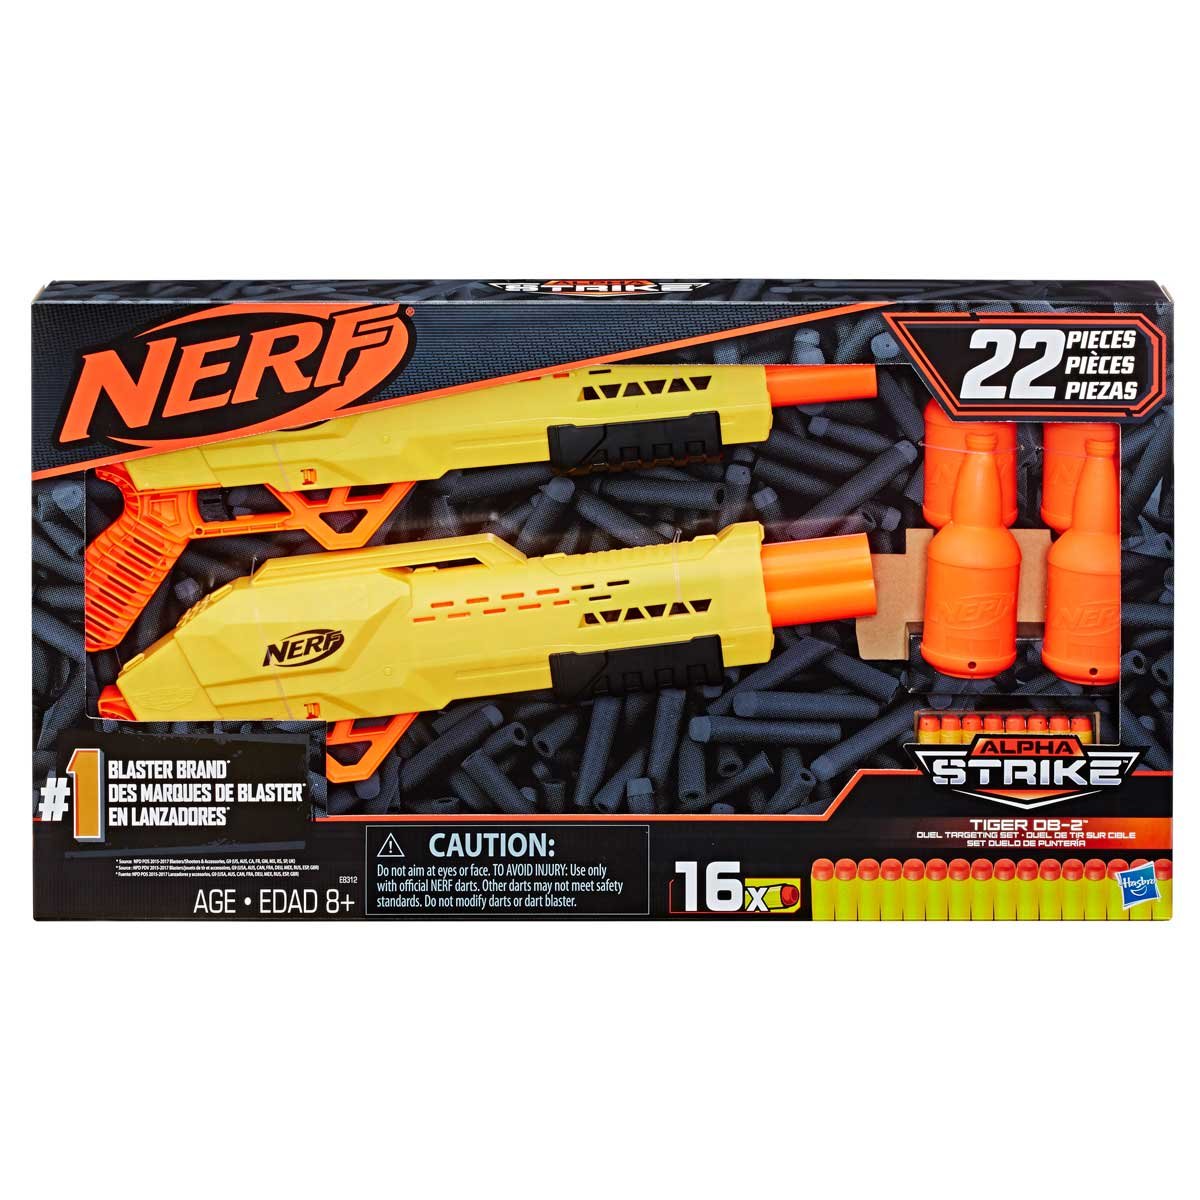 Nerf Alpha Strike Lanzadores Tiger Db-2 - Set de Puntería Hasbro